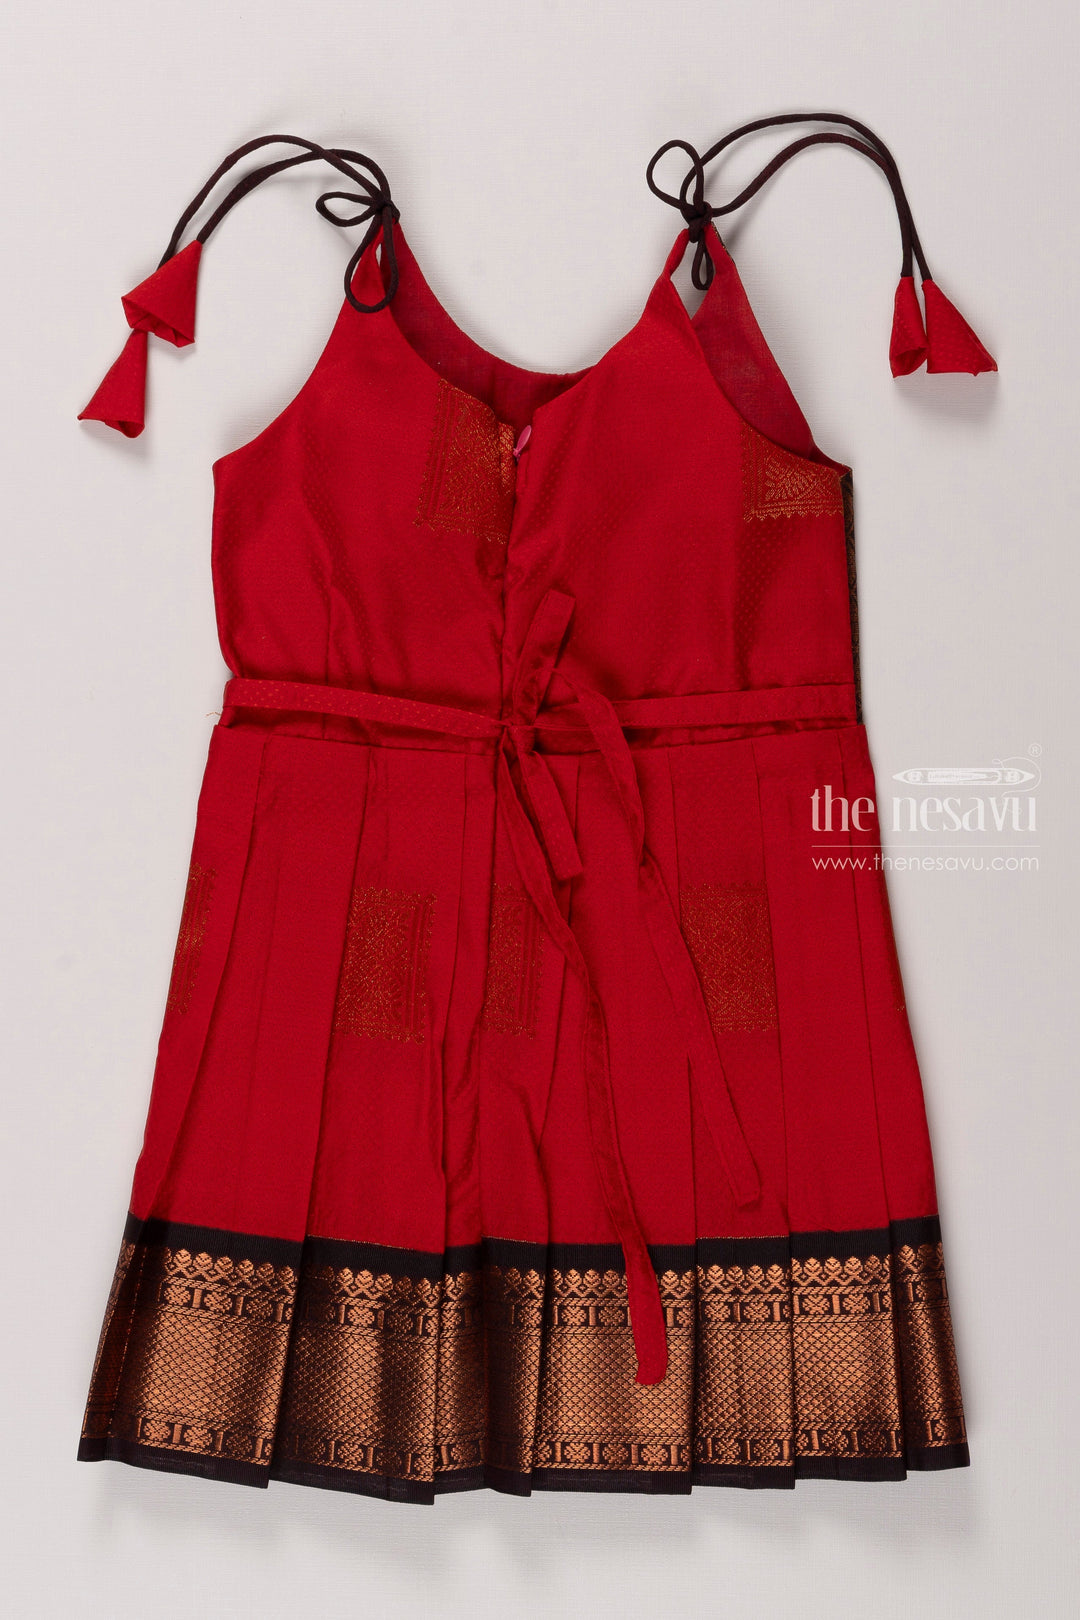 The Nesavu Tie-up Frock Charming Red Silk Tie-Up Frock for Trendy Occasions Nesavu Buy Red Silk Tie Up Frock for Kids | Ethnic Pattern | Festive Wear | The Nesavu